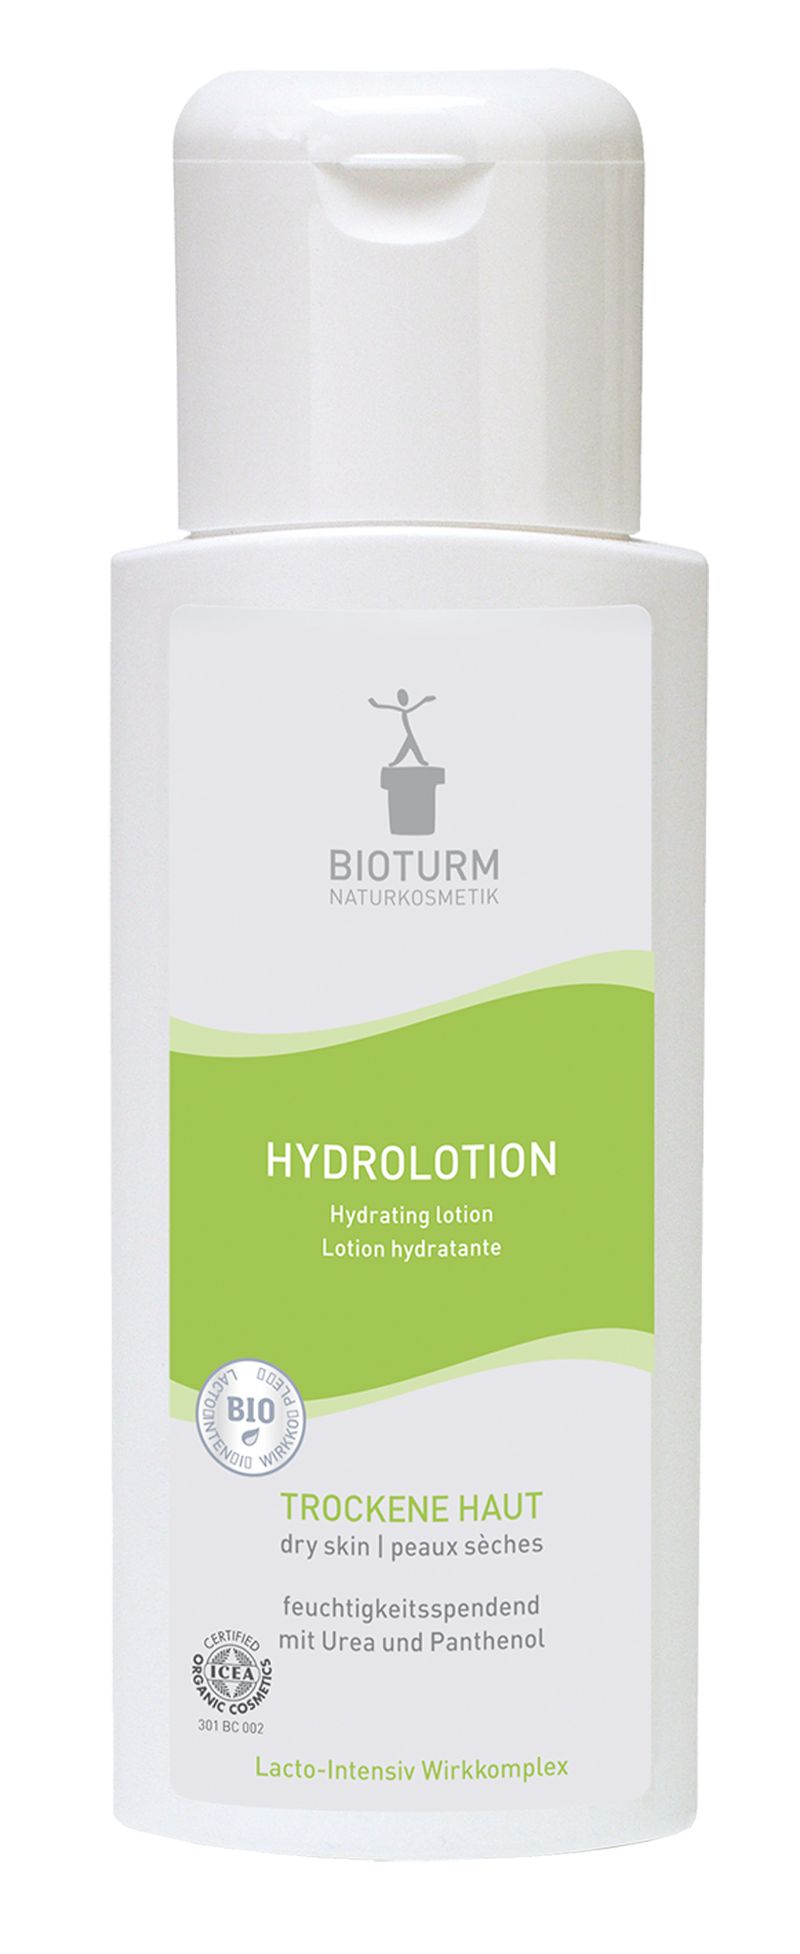 BIOTURM Hydrolotion 200 ml